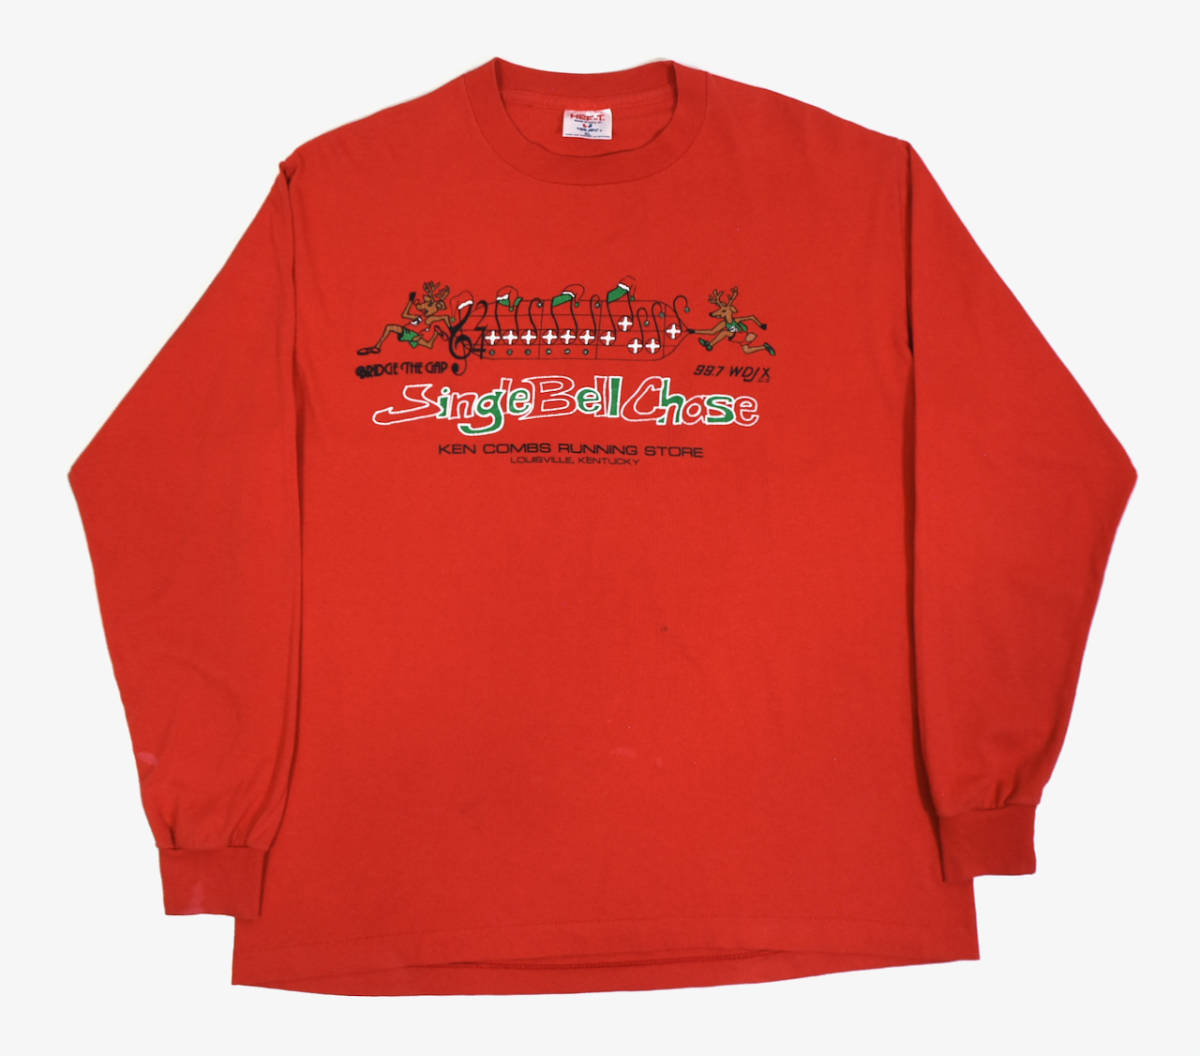 USA製 1990s KEN COMBS RUNNING STORE L/S Tee XL Red オールド長袖Tシャツ ロンT クリスマス トナカイ レッド